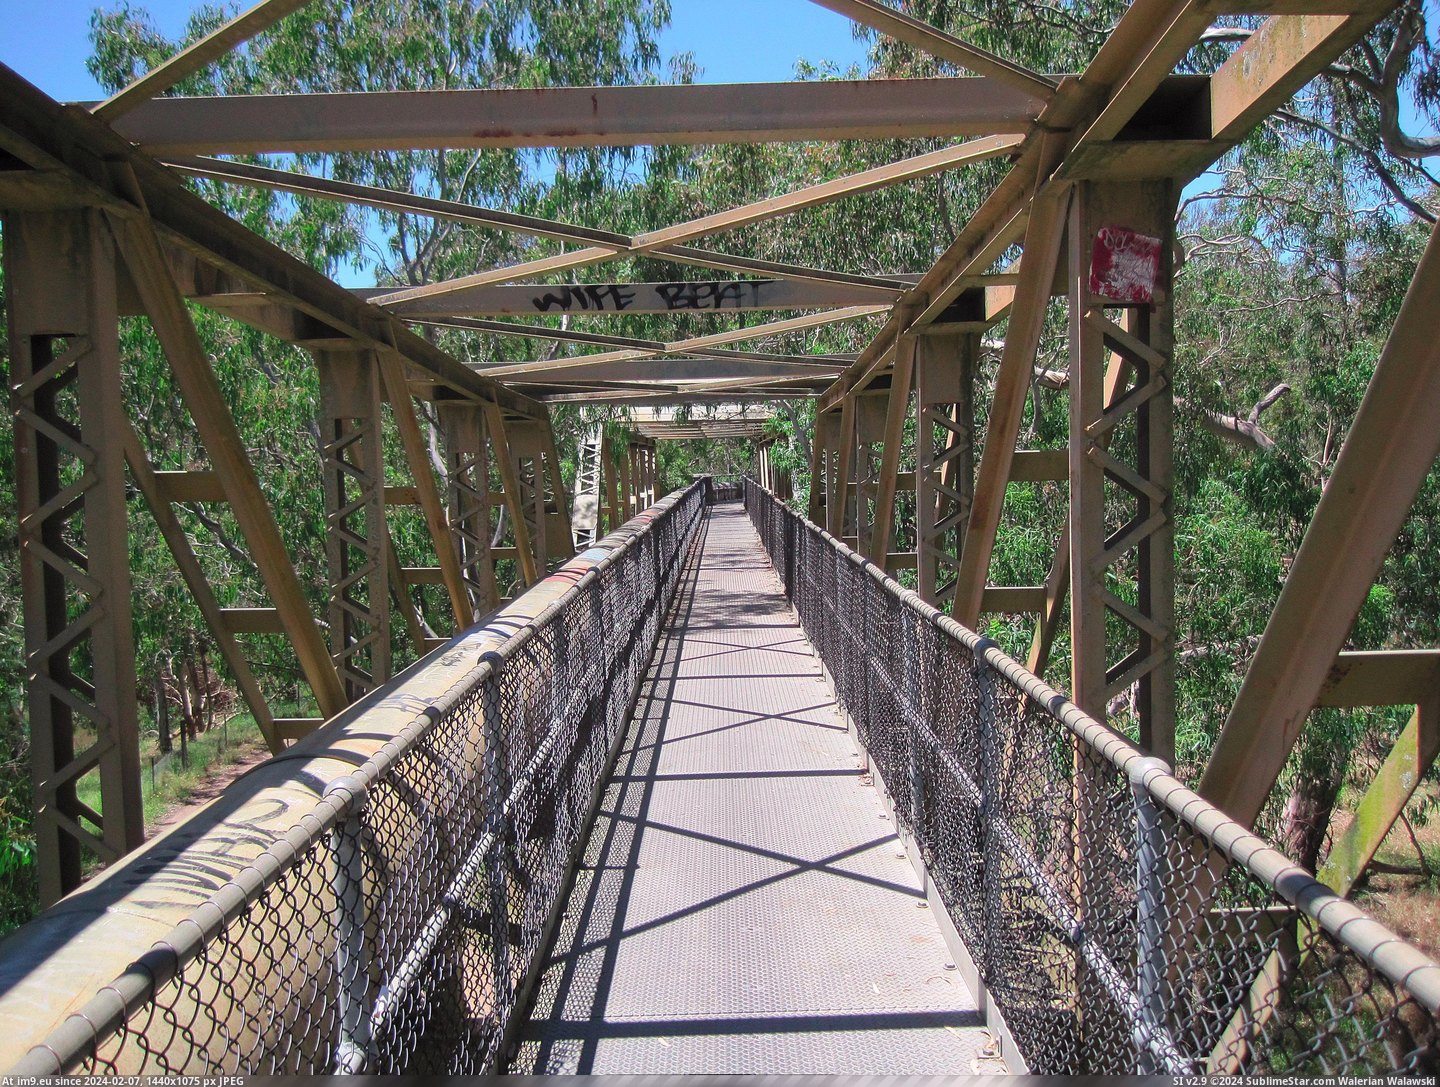 footbridge (in Yarra)